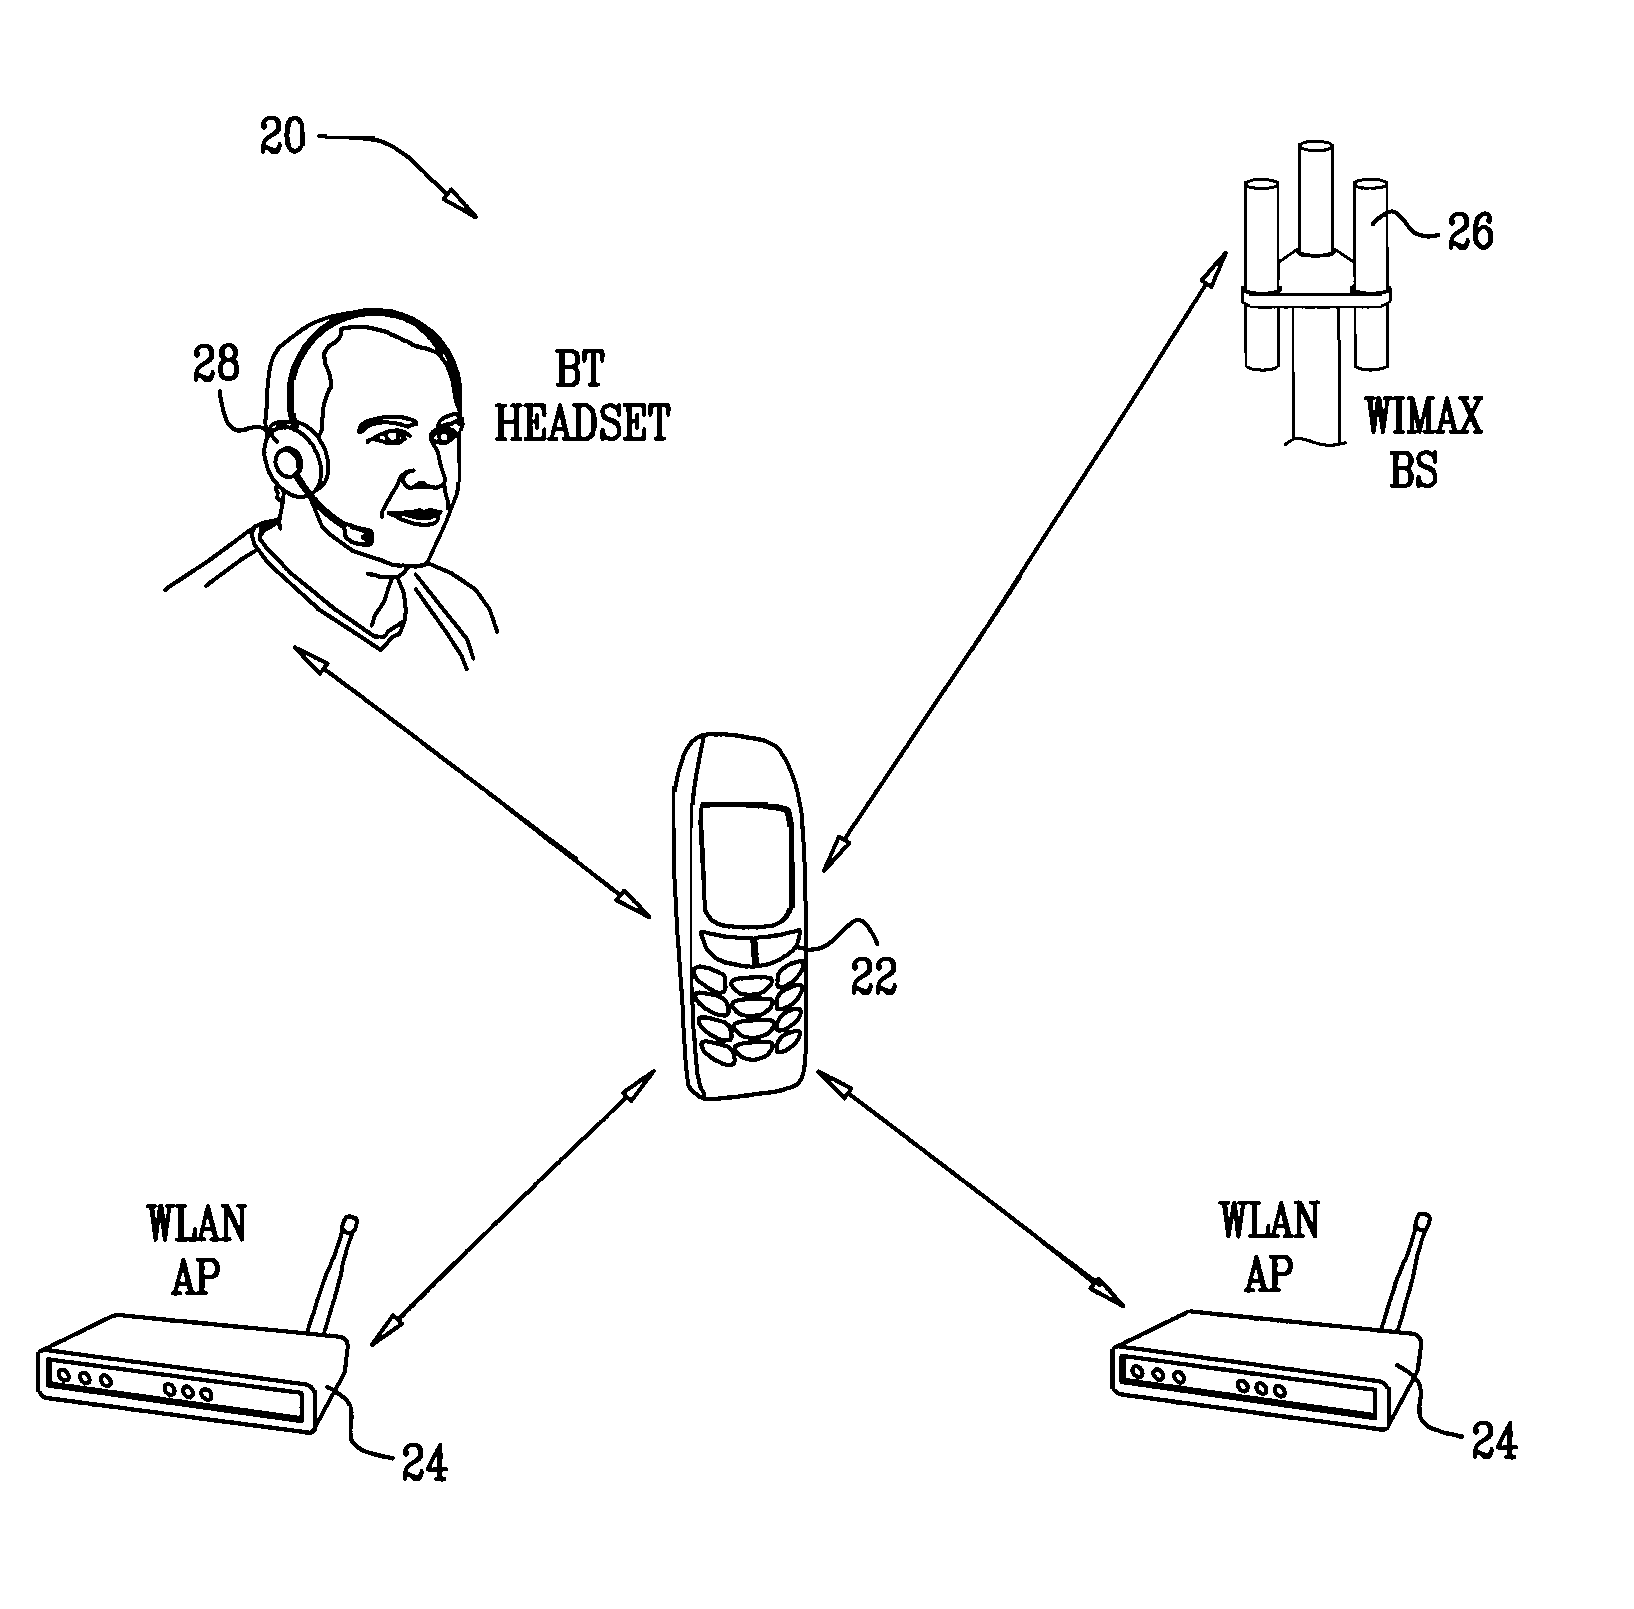 Multi-function wireless terminal